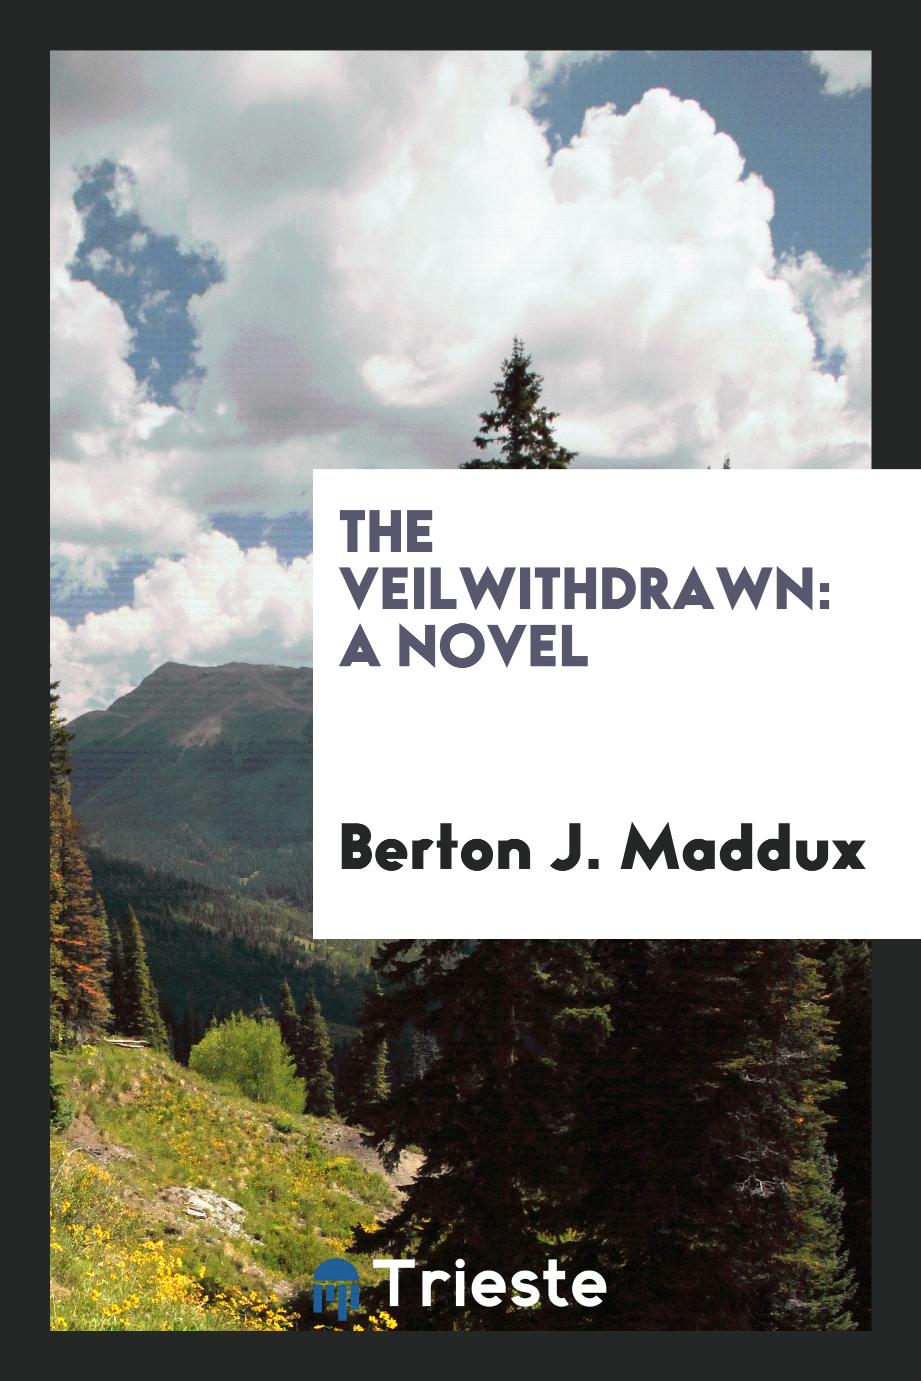 The Veilwithdrawn: A Novel